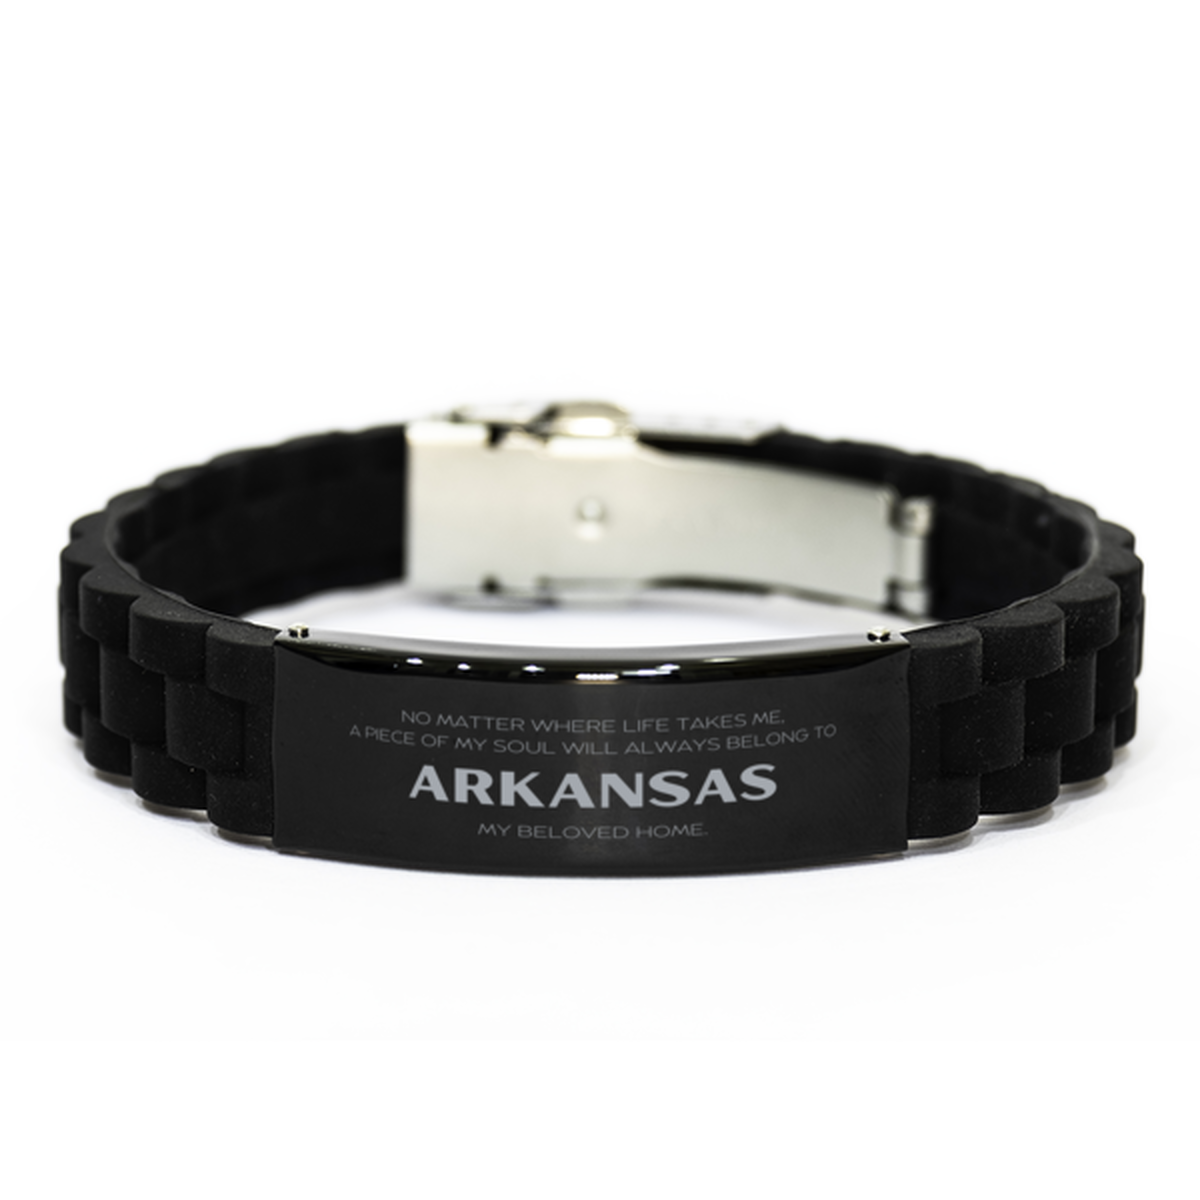 Love Arkansas State Gifts, My soul will always belong to Arkansas, Proud Black Glidelock Clasp Bracelet, Birthday Unique Gifts For Arkansas Men, Women, Friends